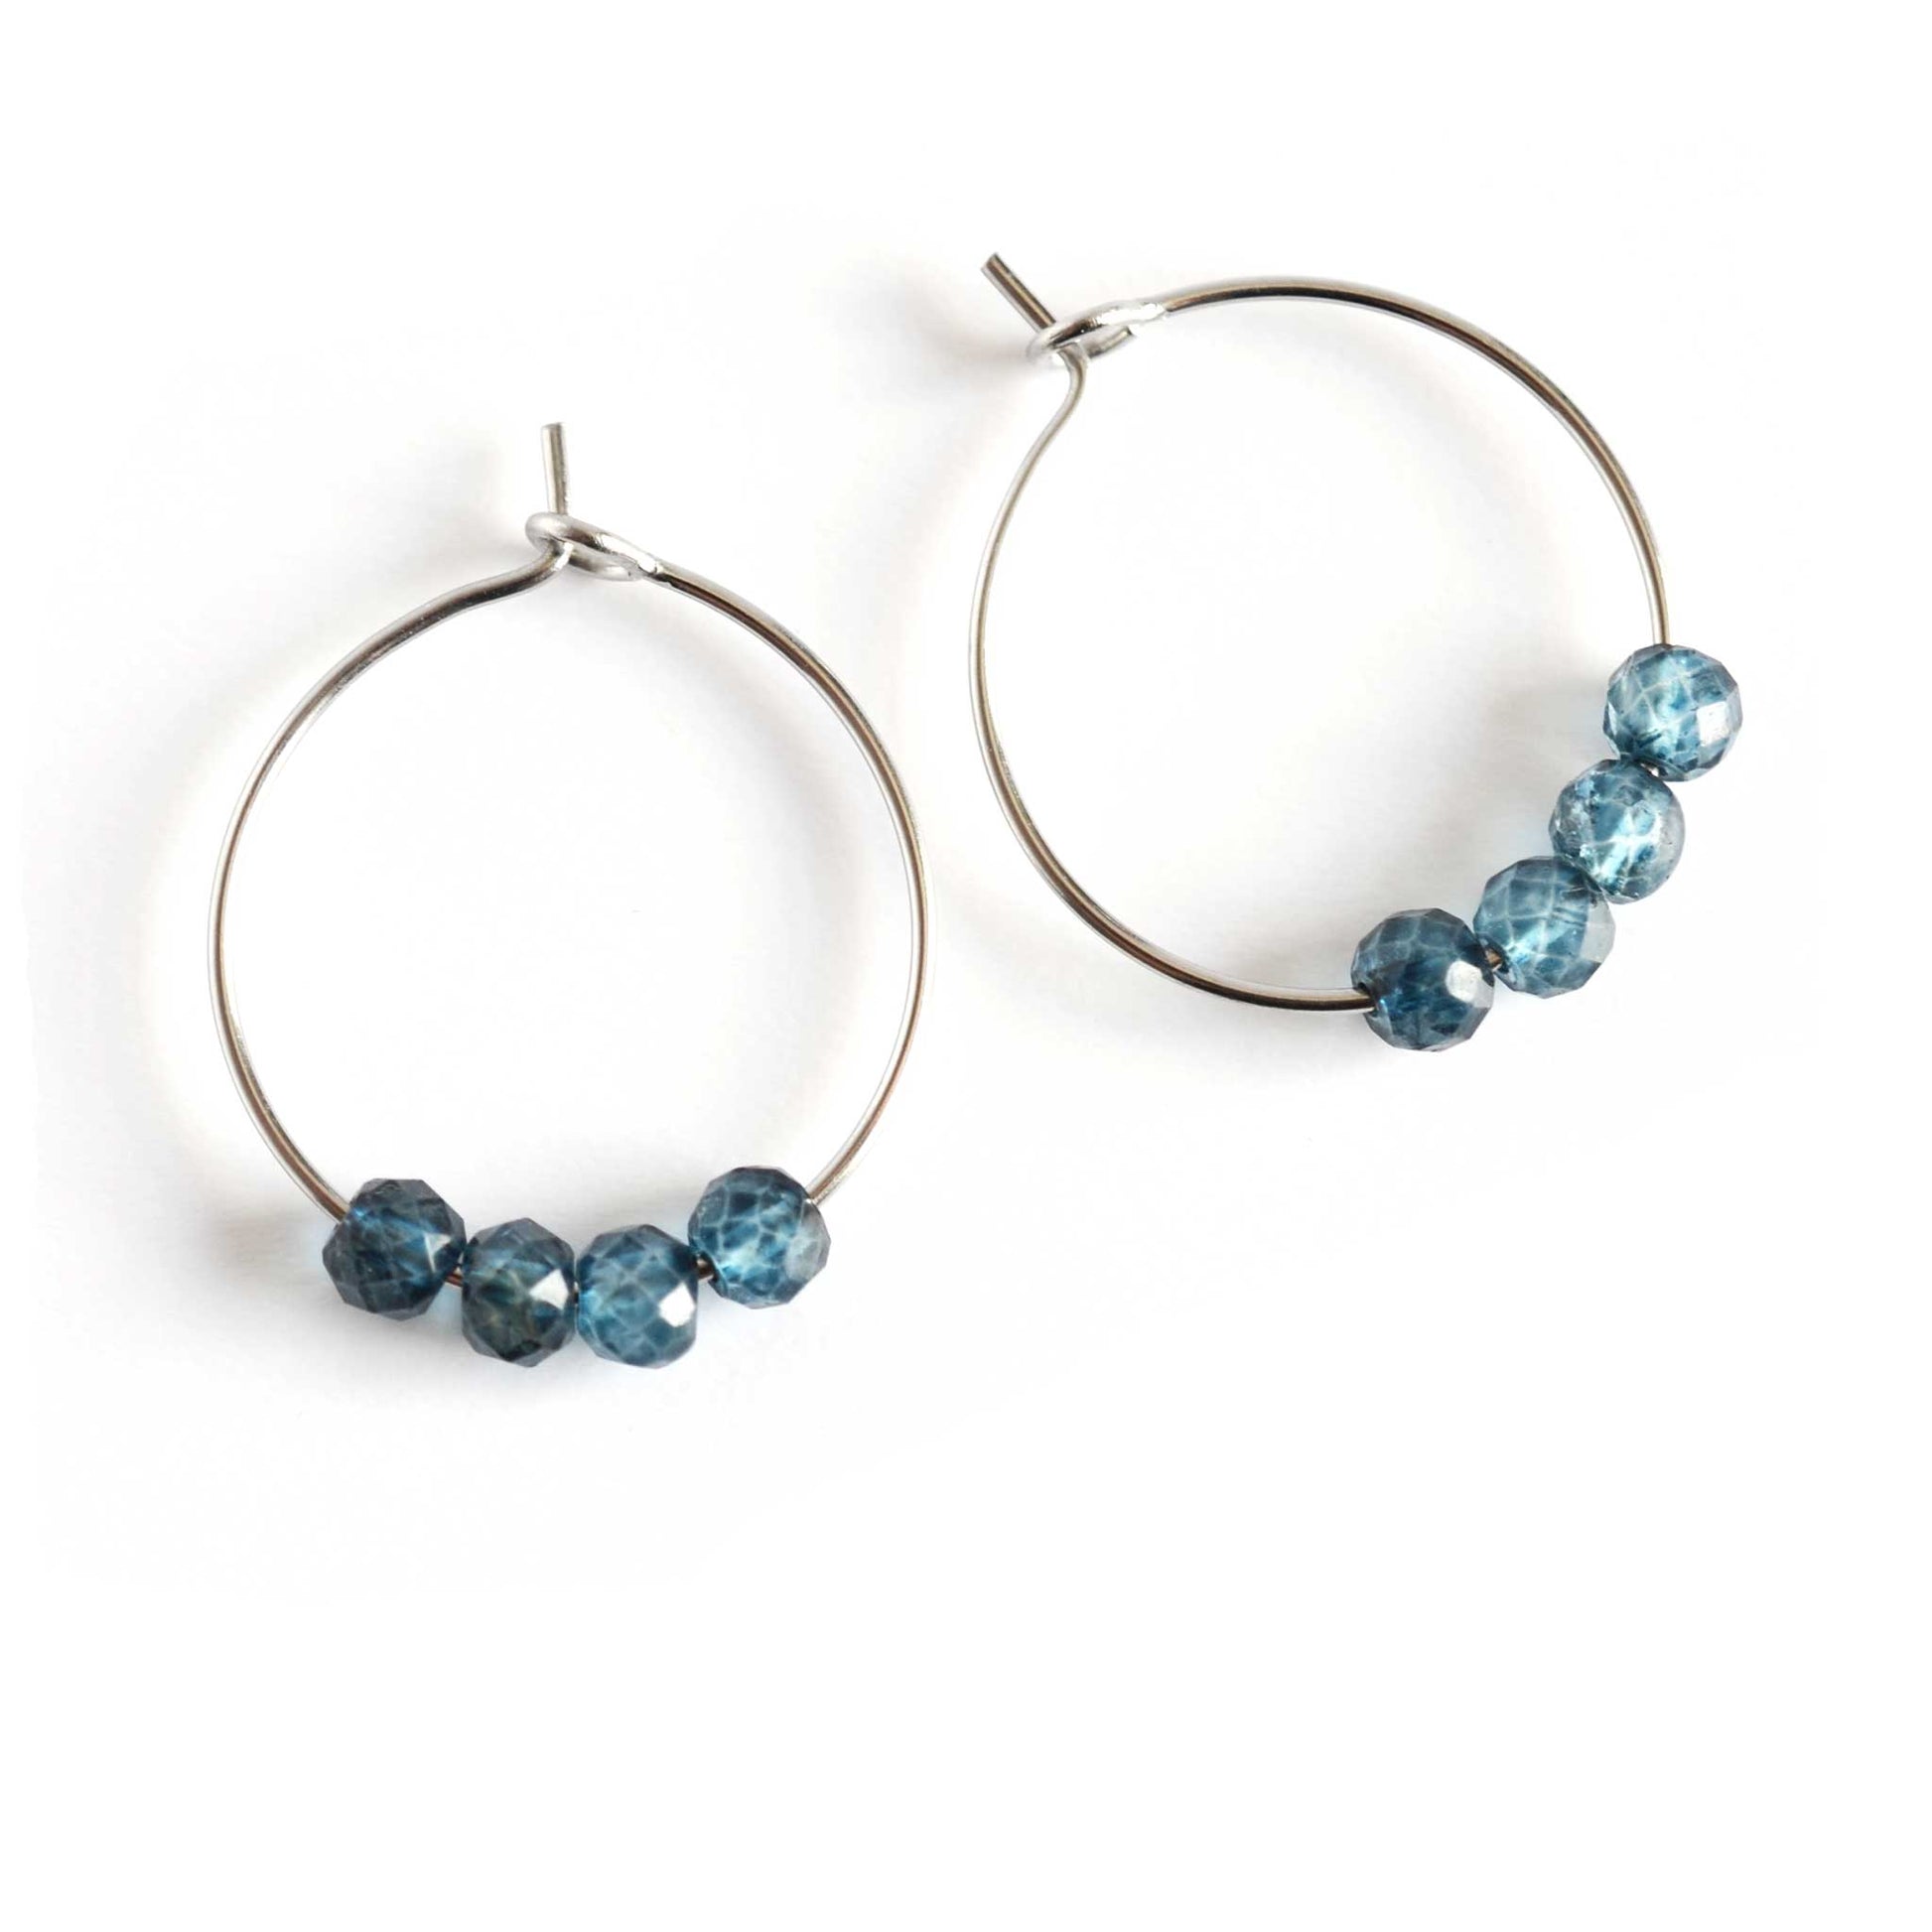 Pair of blue Topaz hoop earrings with hypoallergenic surgical steel hoops on white background